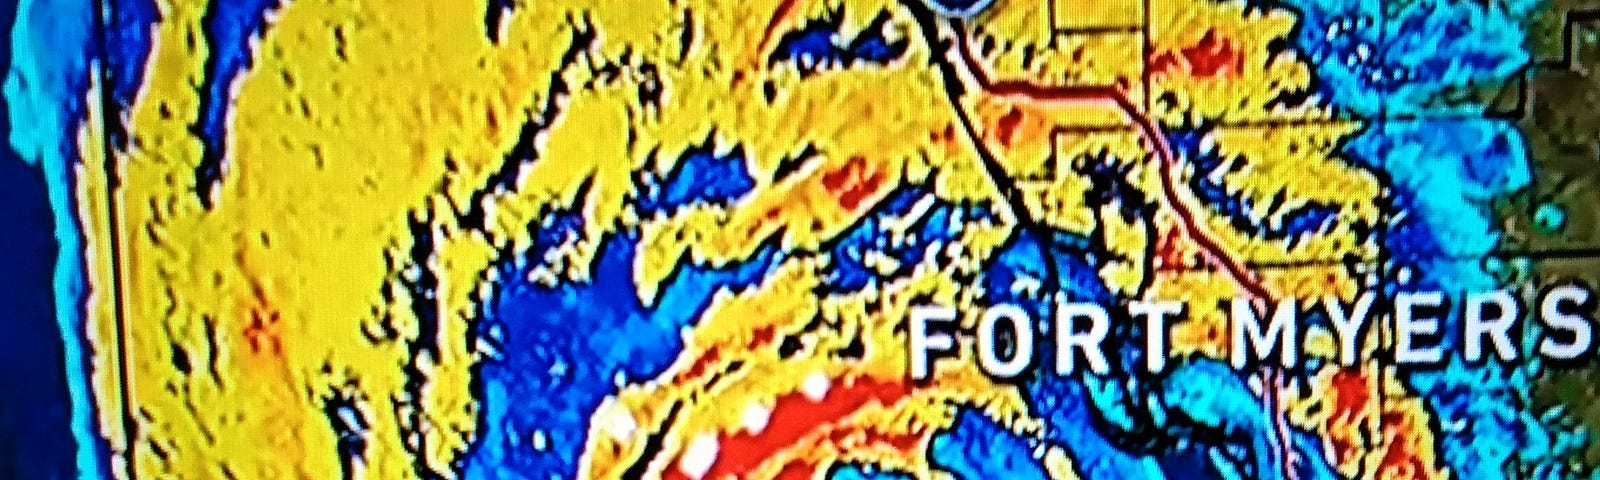 Radar image of Hurricane Ian making landfall in Fort Myers, FL